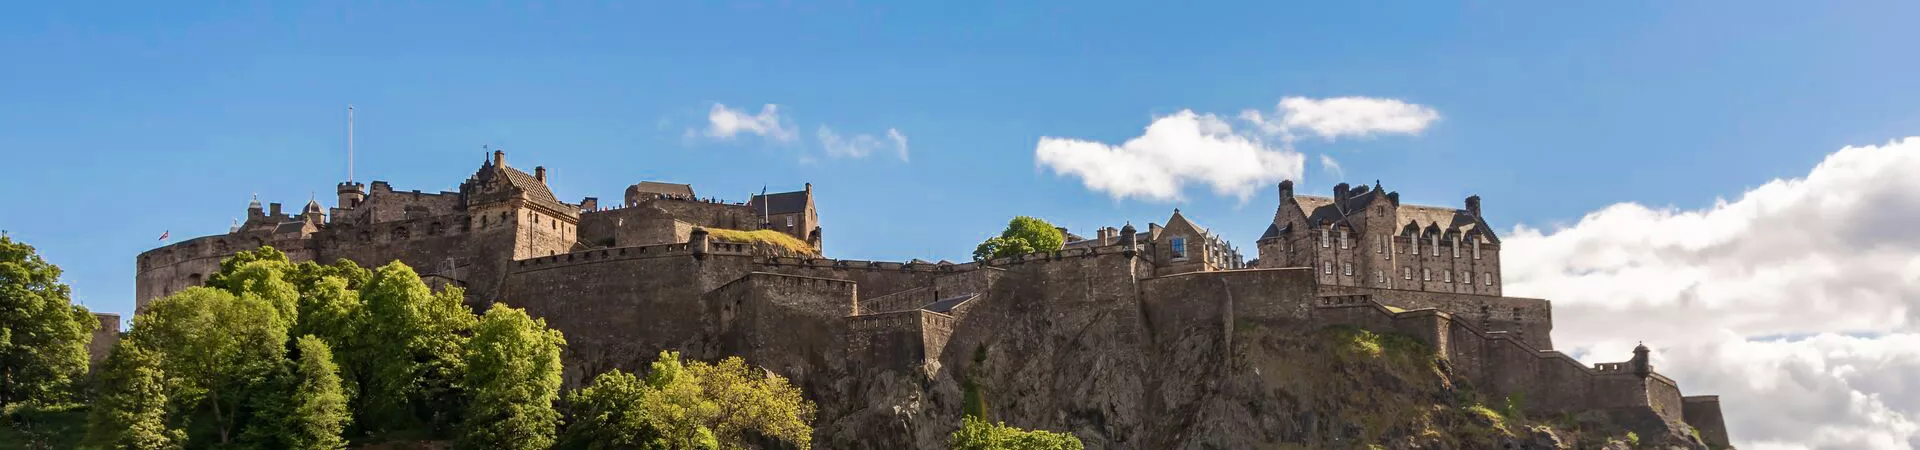 Edinburgh Trips and Travel Guide